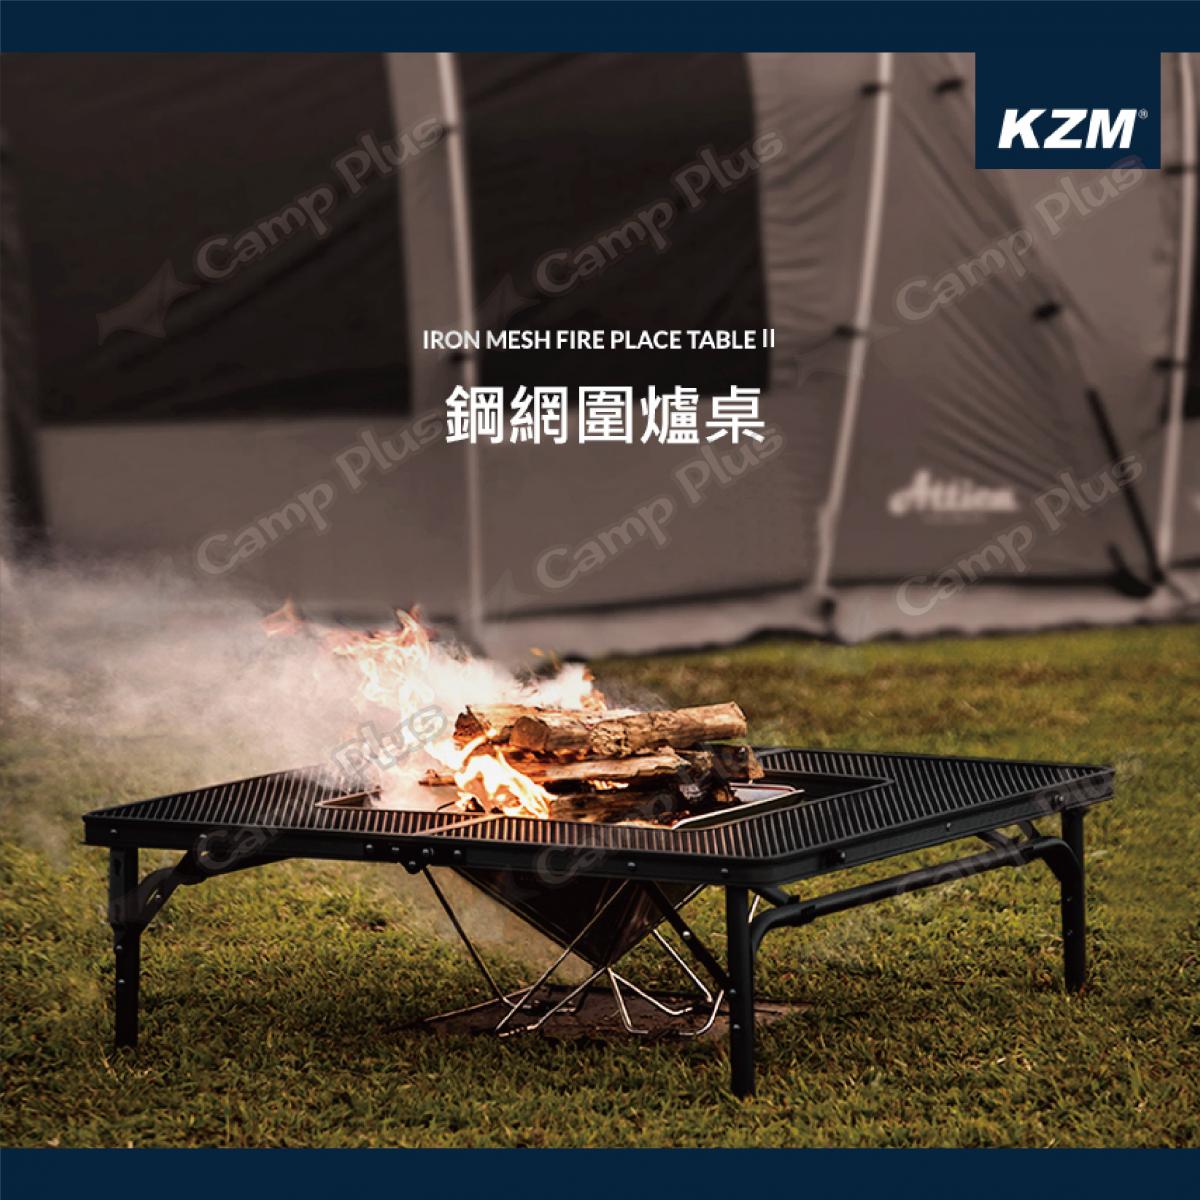 【KZM】鋼網圍爐桌 K9T3U012 (悠遊戶外) 1